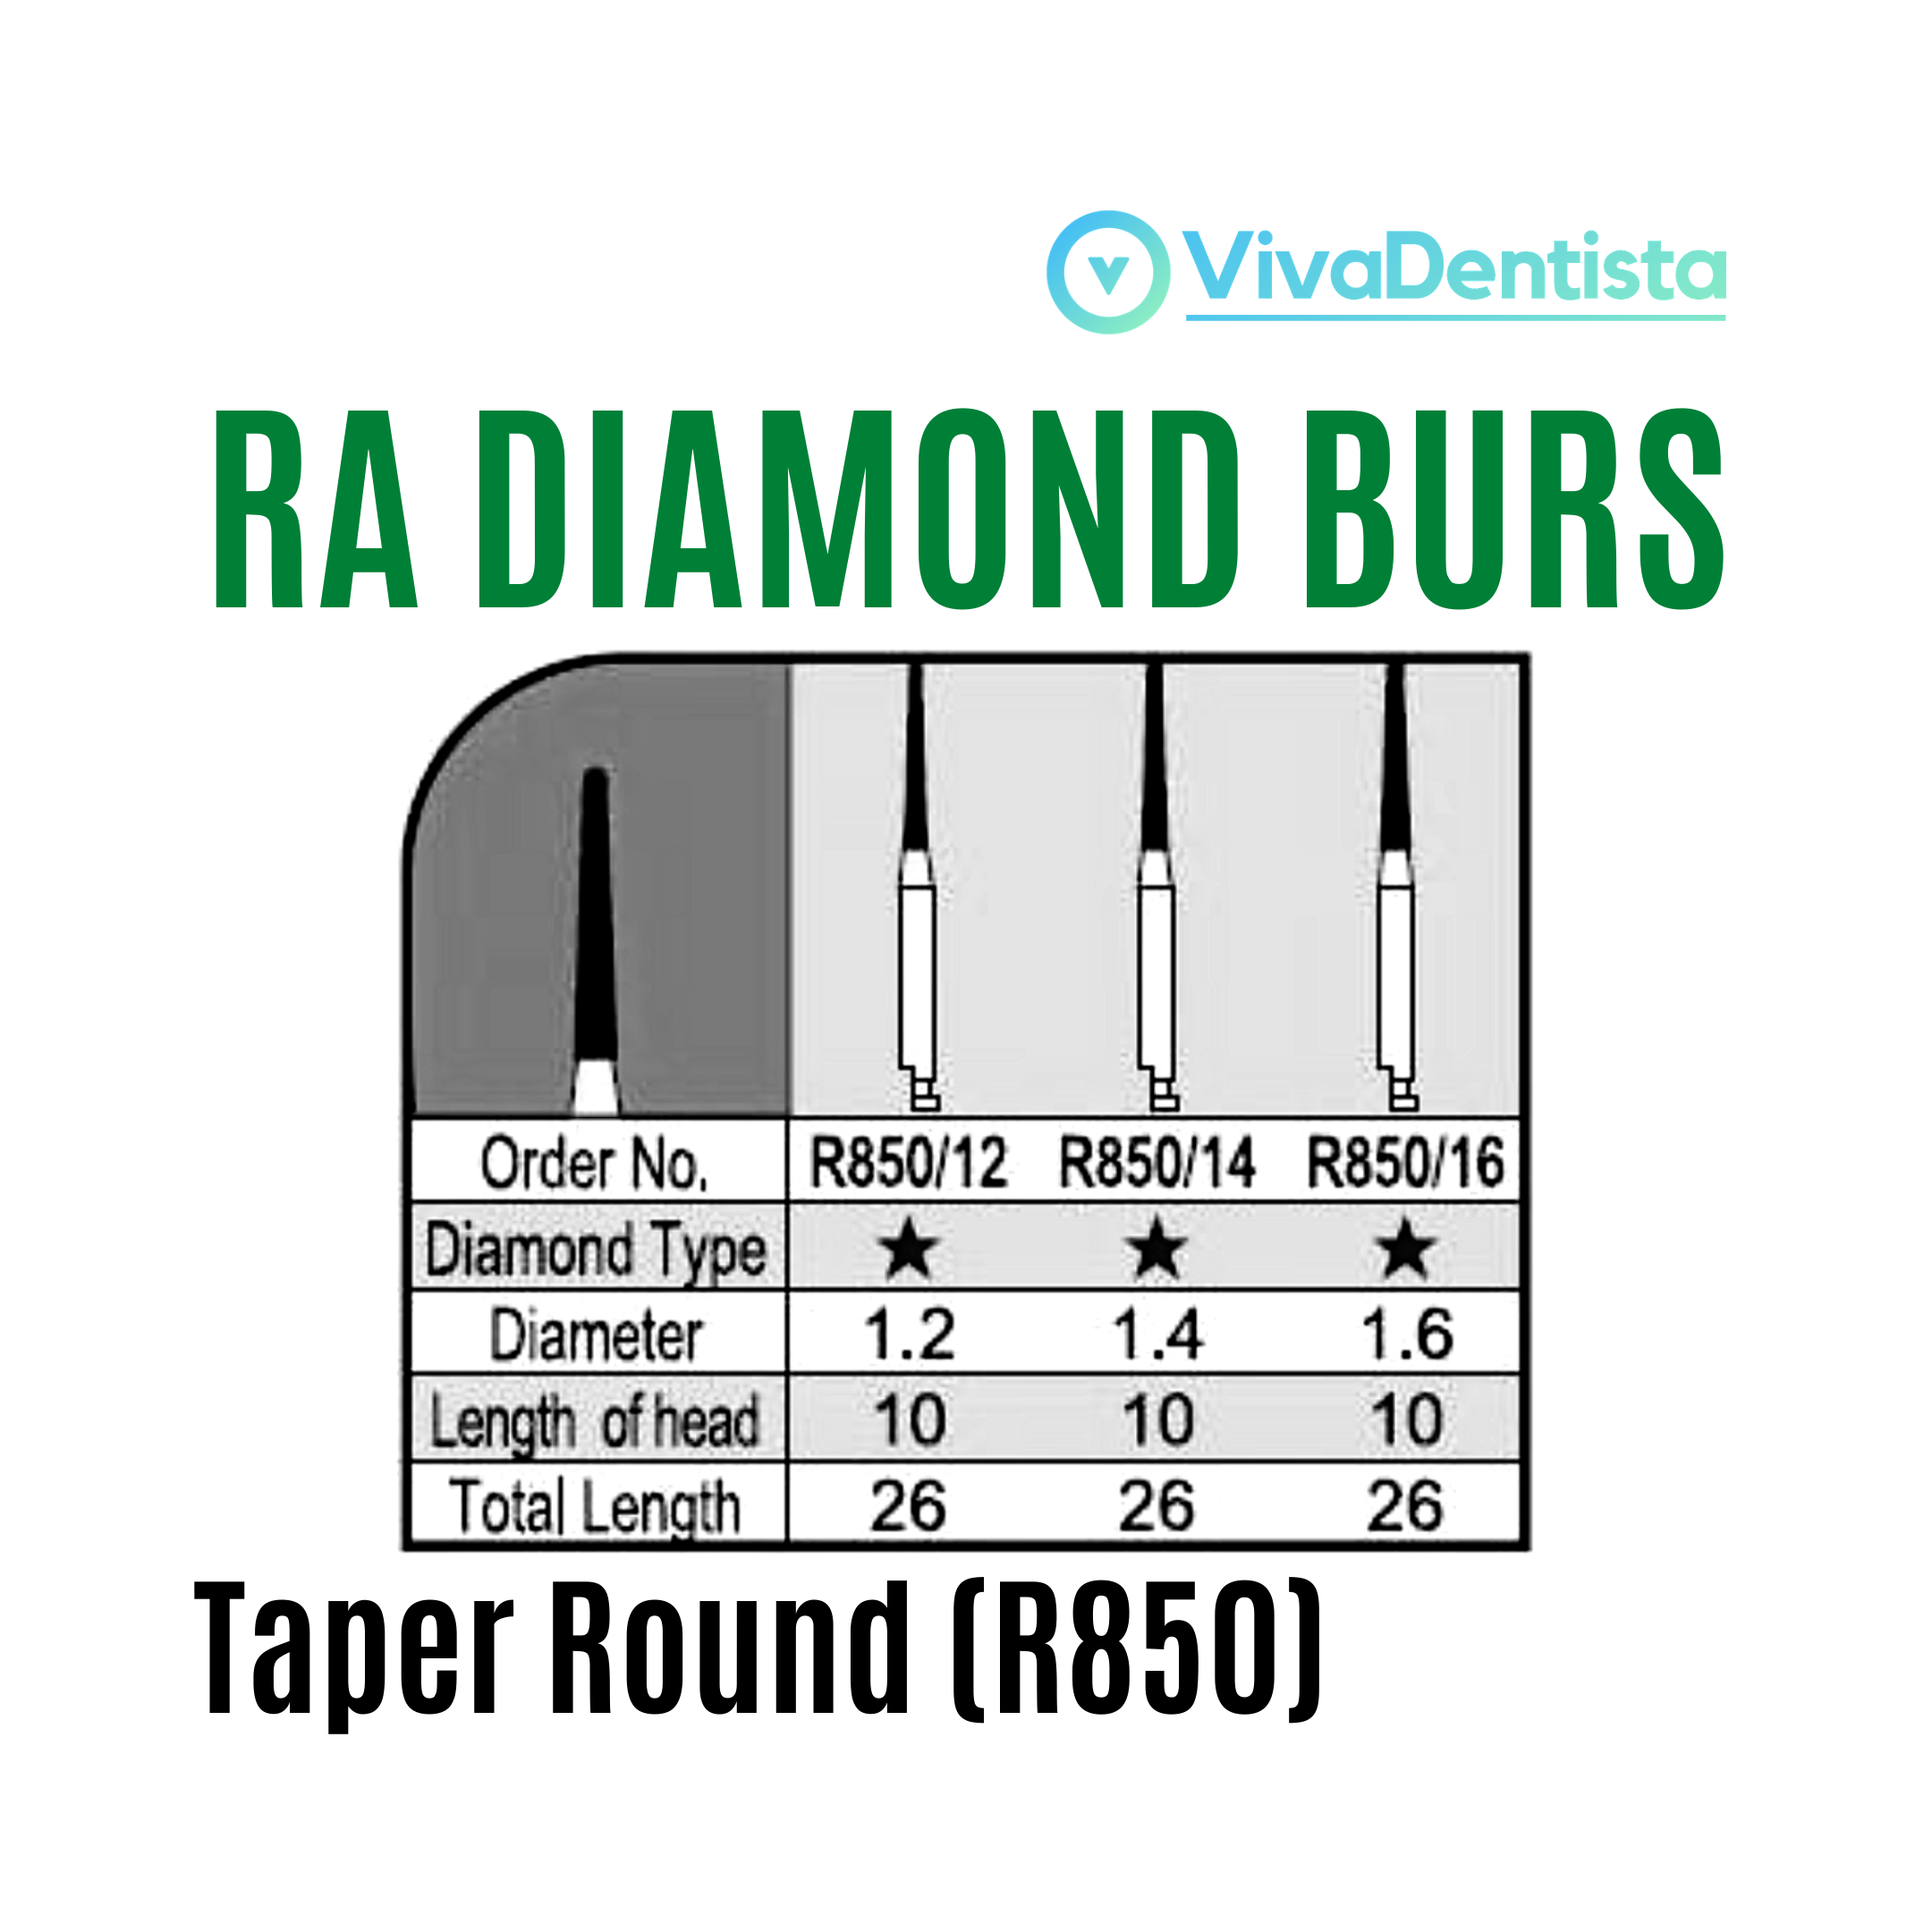 RA Diamond Burs (Taper Round) - 5pcs